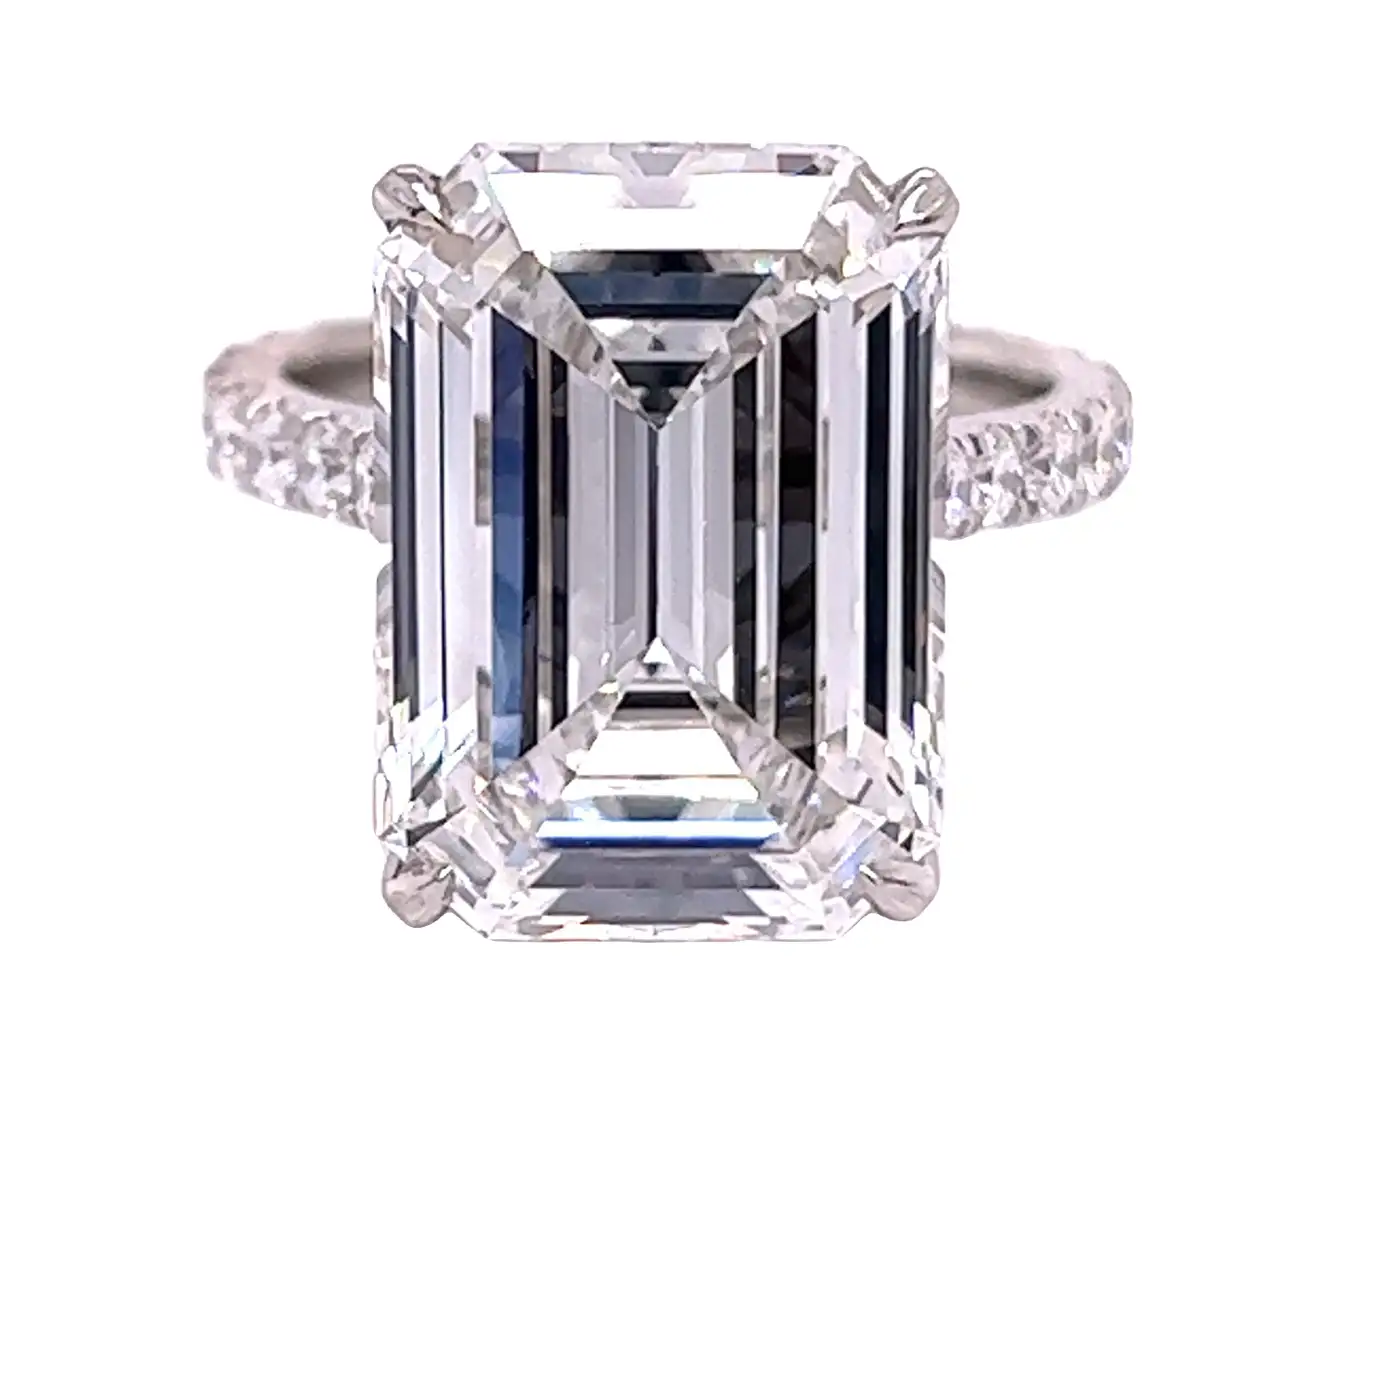 David-Rosenberg-10.41-Carat-Emerald-Cut-F-VVS2-GIA-Diamond-Engagement-Ring-10.webp